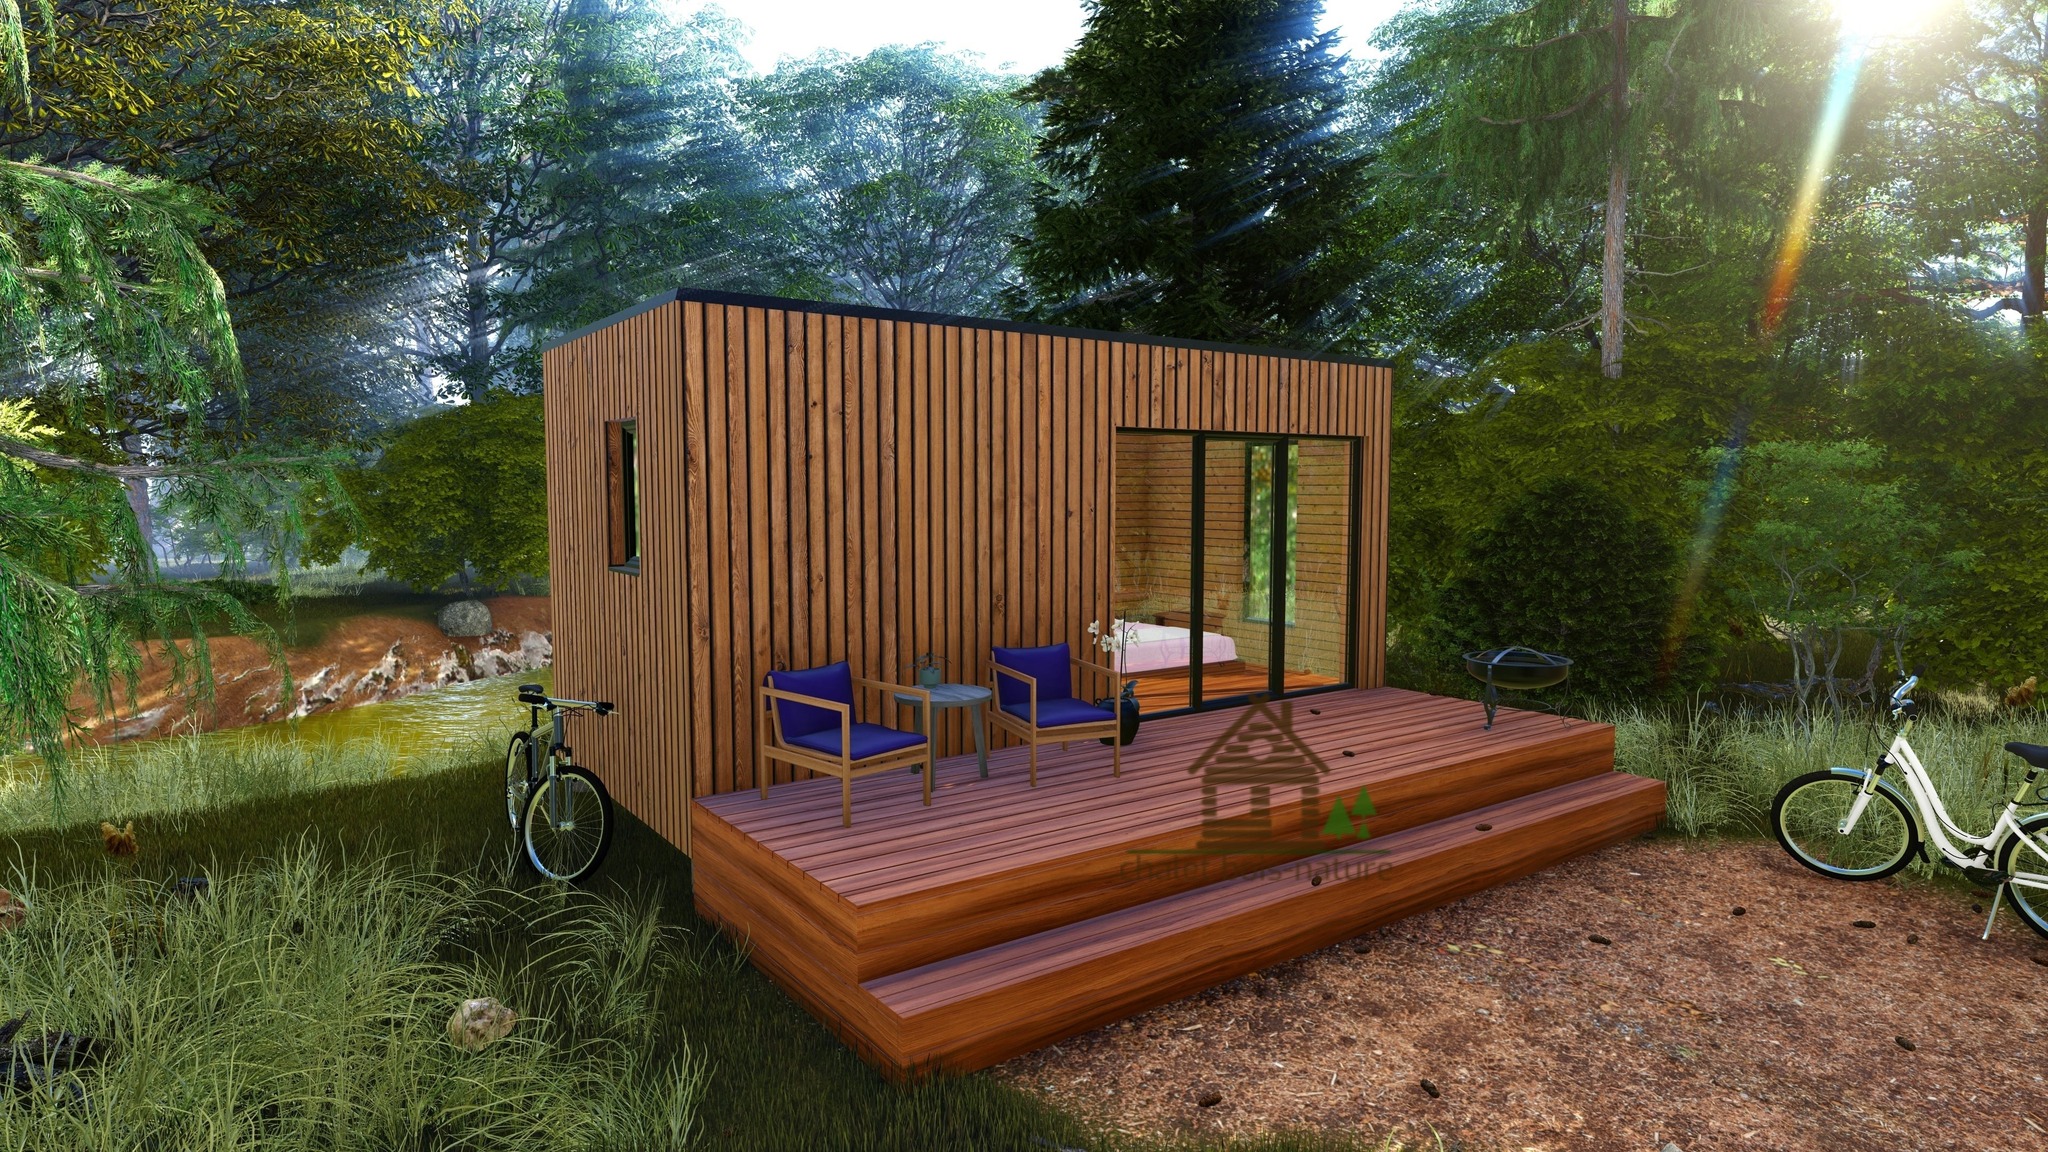 Chalet Bois / Chalet « Camping18 » en bois de 18m² en madriers massifs de 44mm + Bardage horizontal